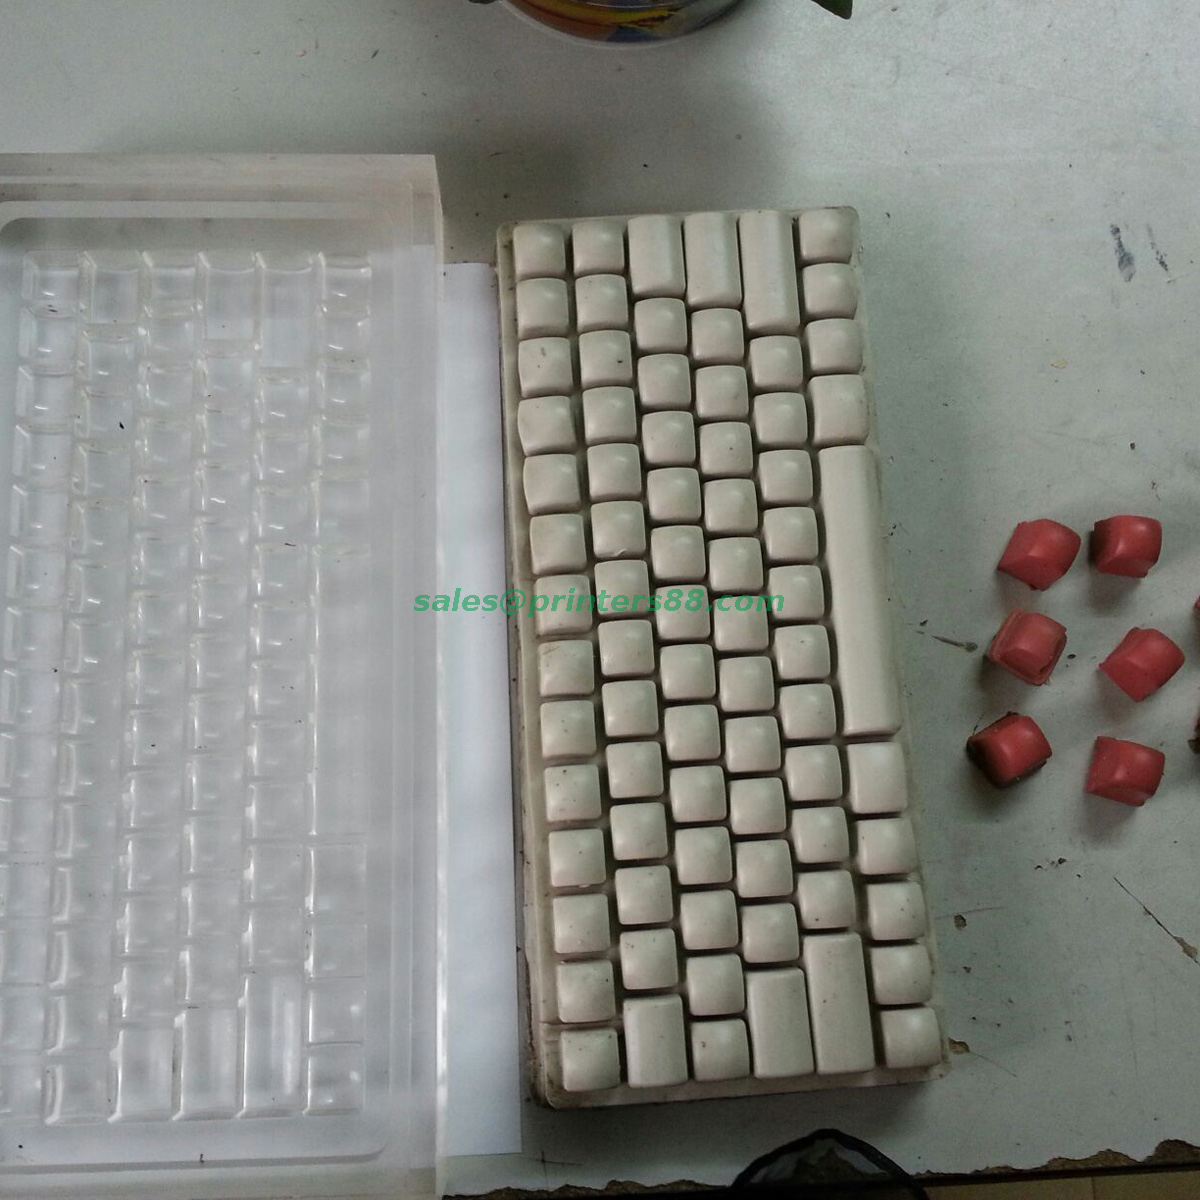 Pad Printer for Arabic Keyboards